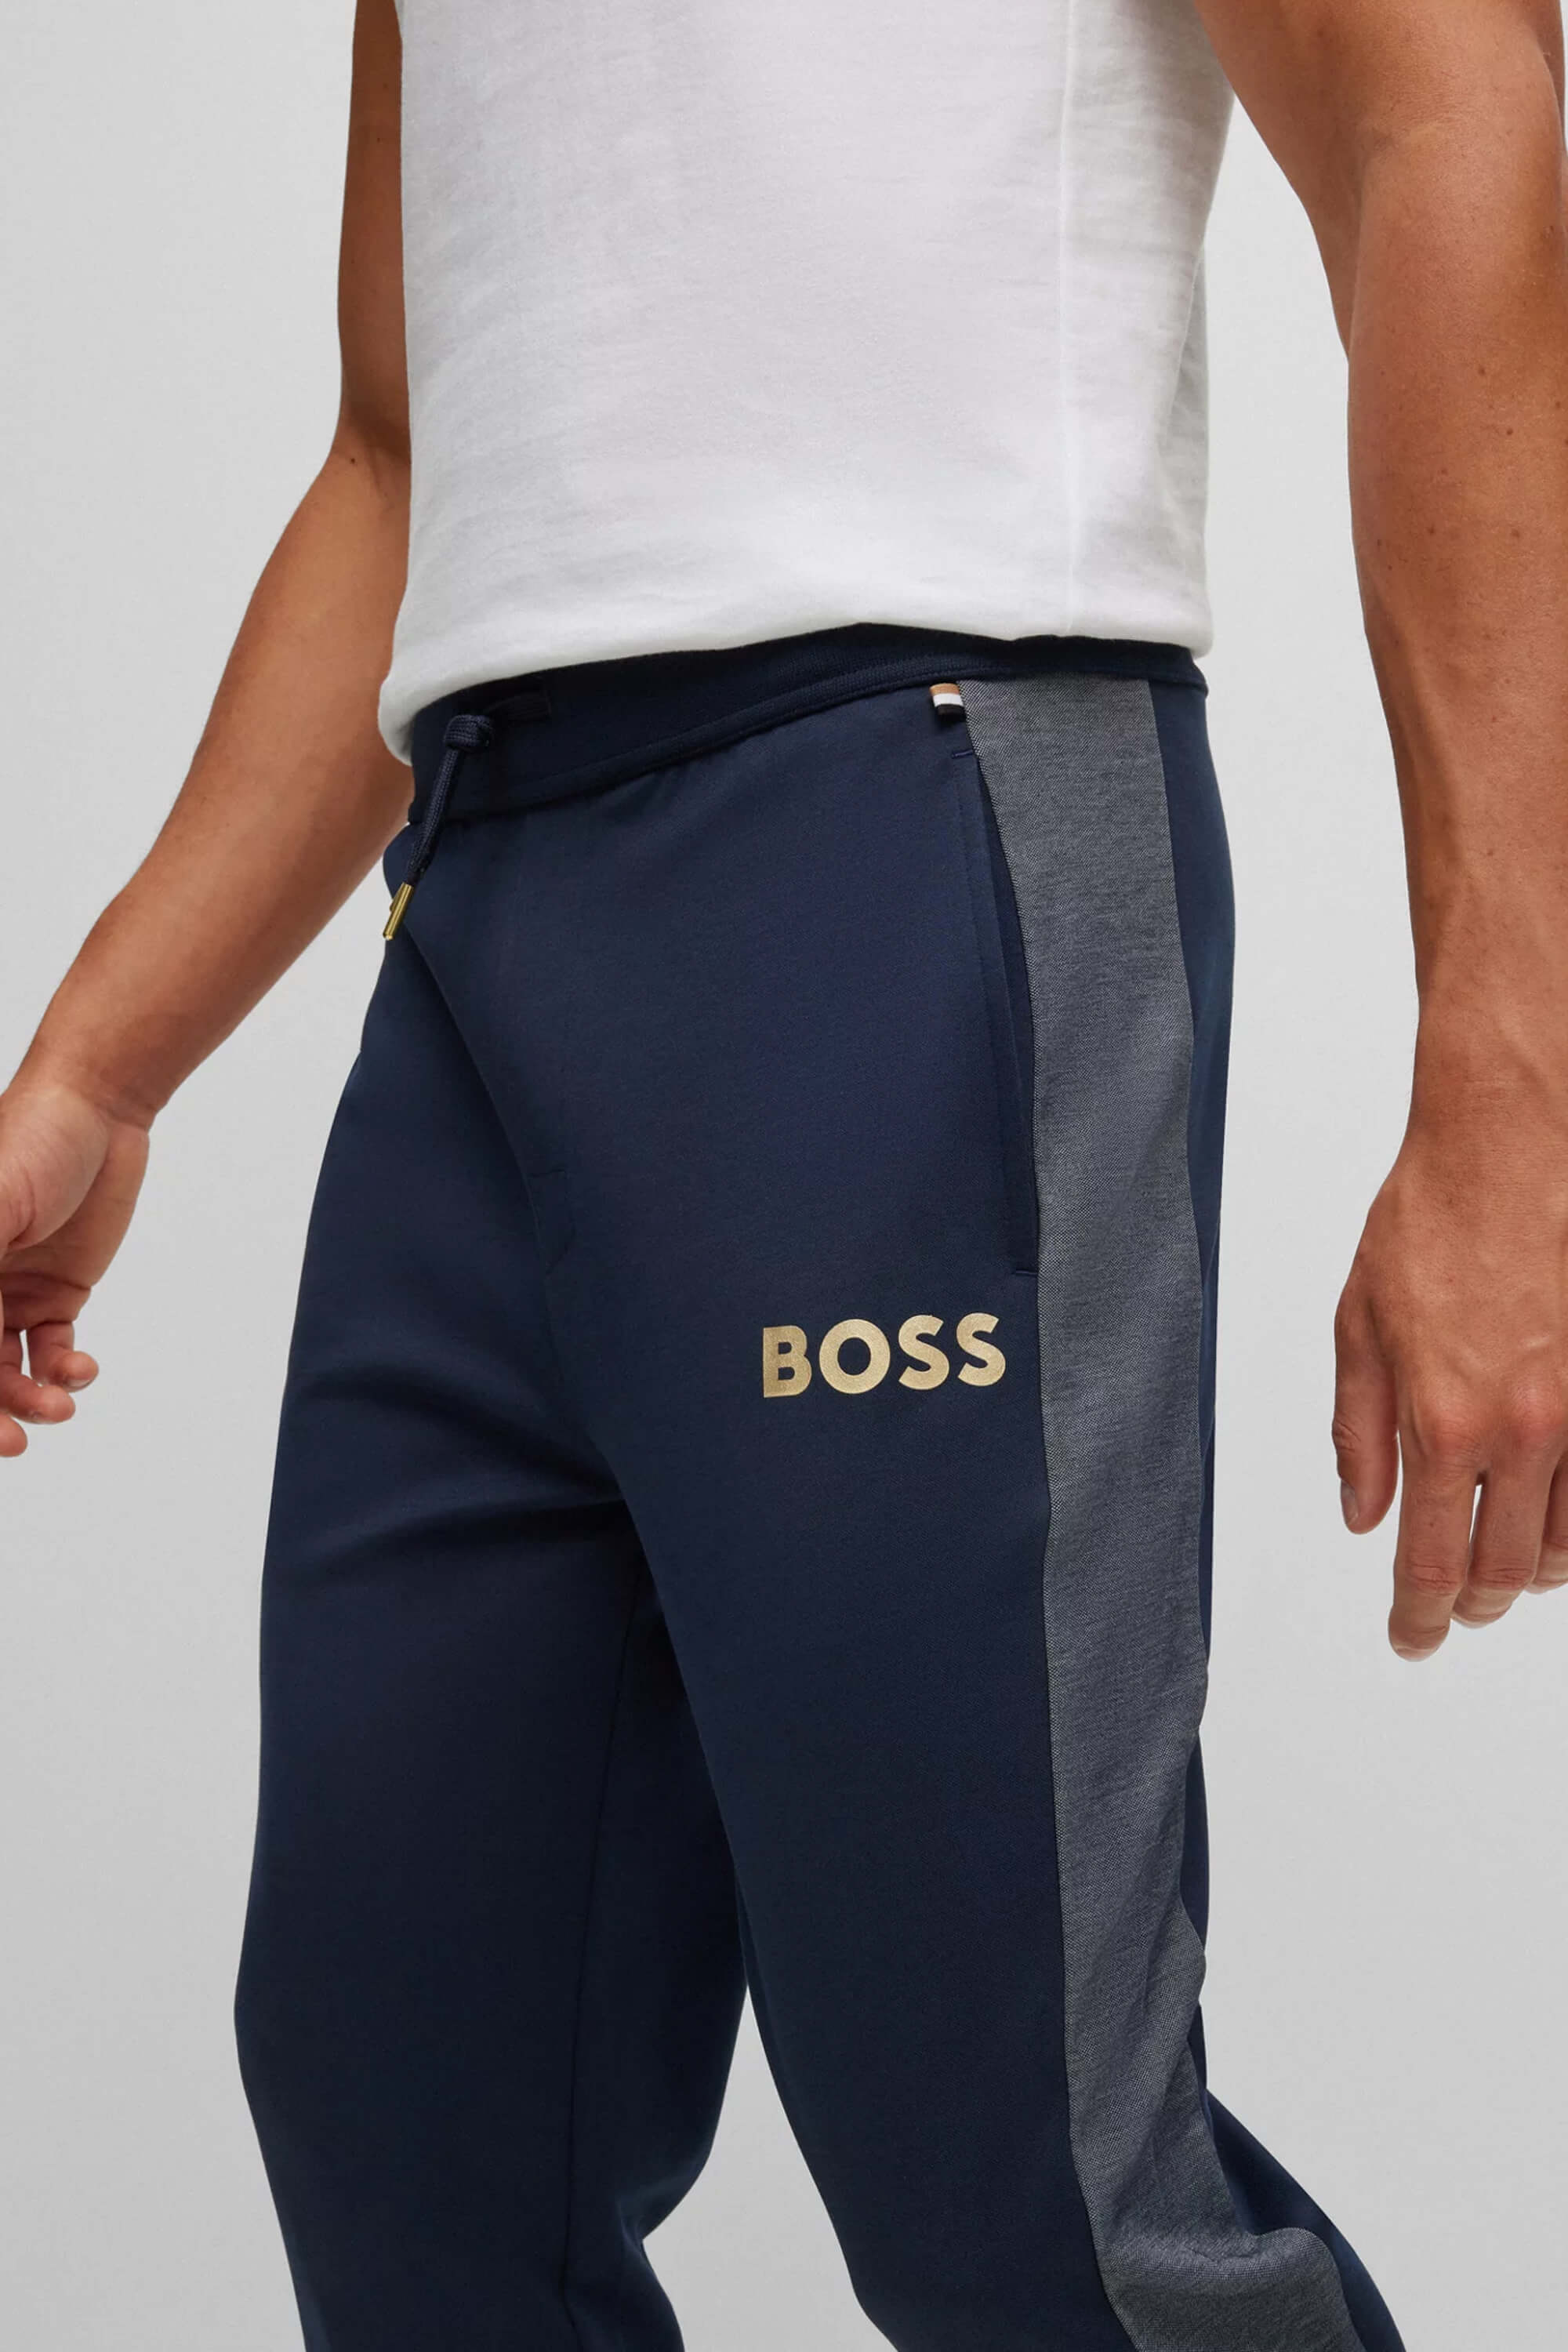 HUGO BOSS Jogging Pants Trousers Jogger Sweat-Pants Sports Tracksuit  Bottoms S | eBay